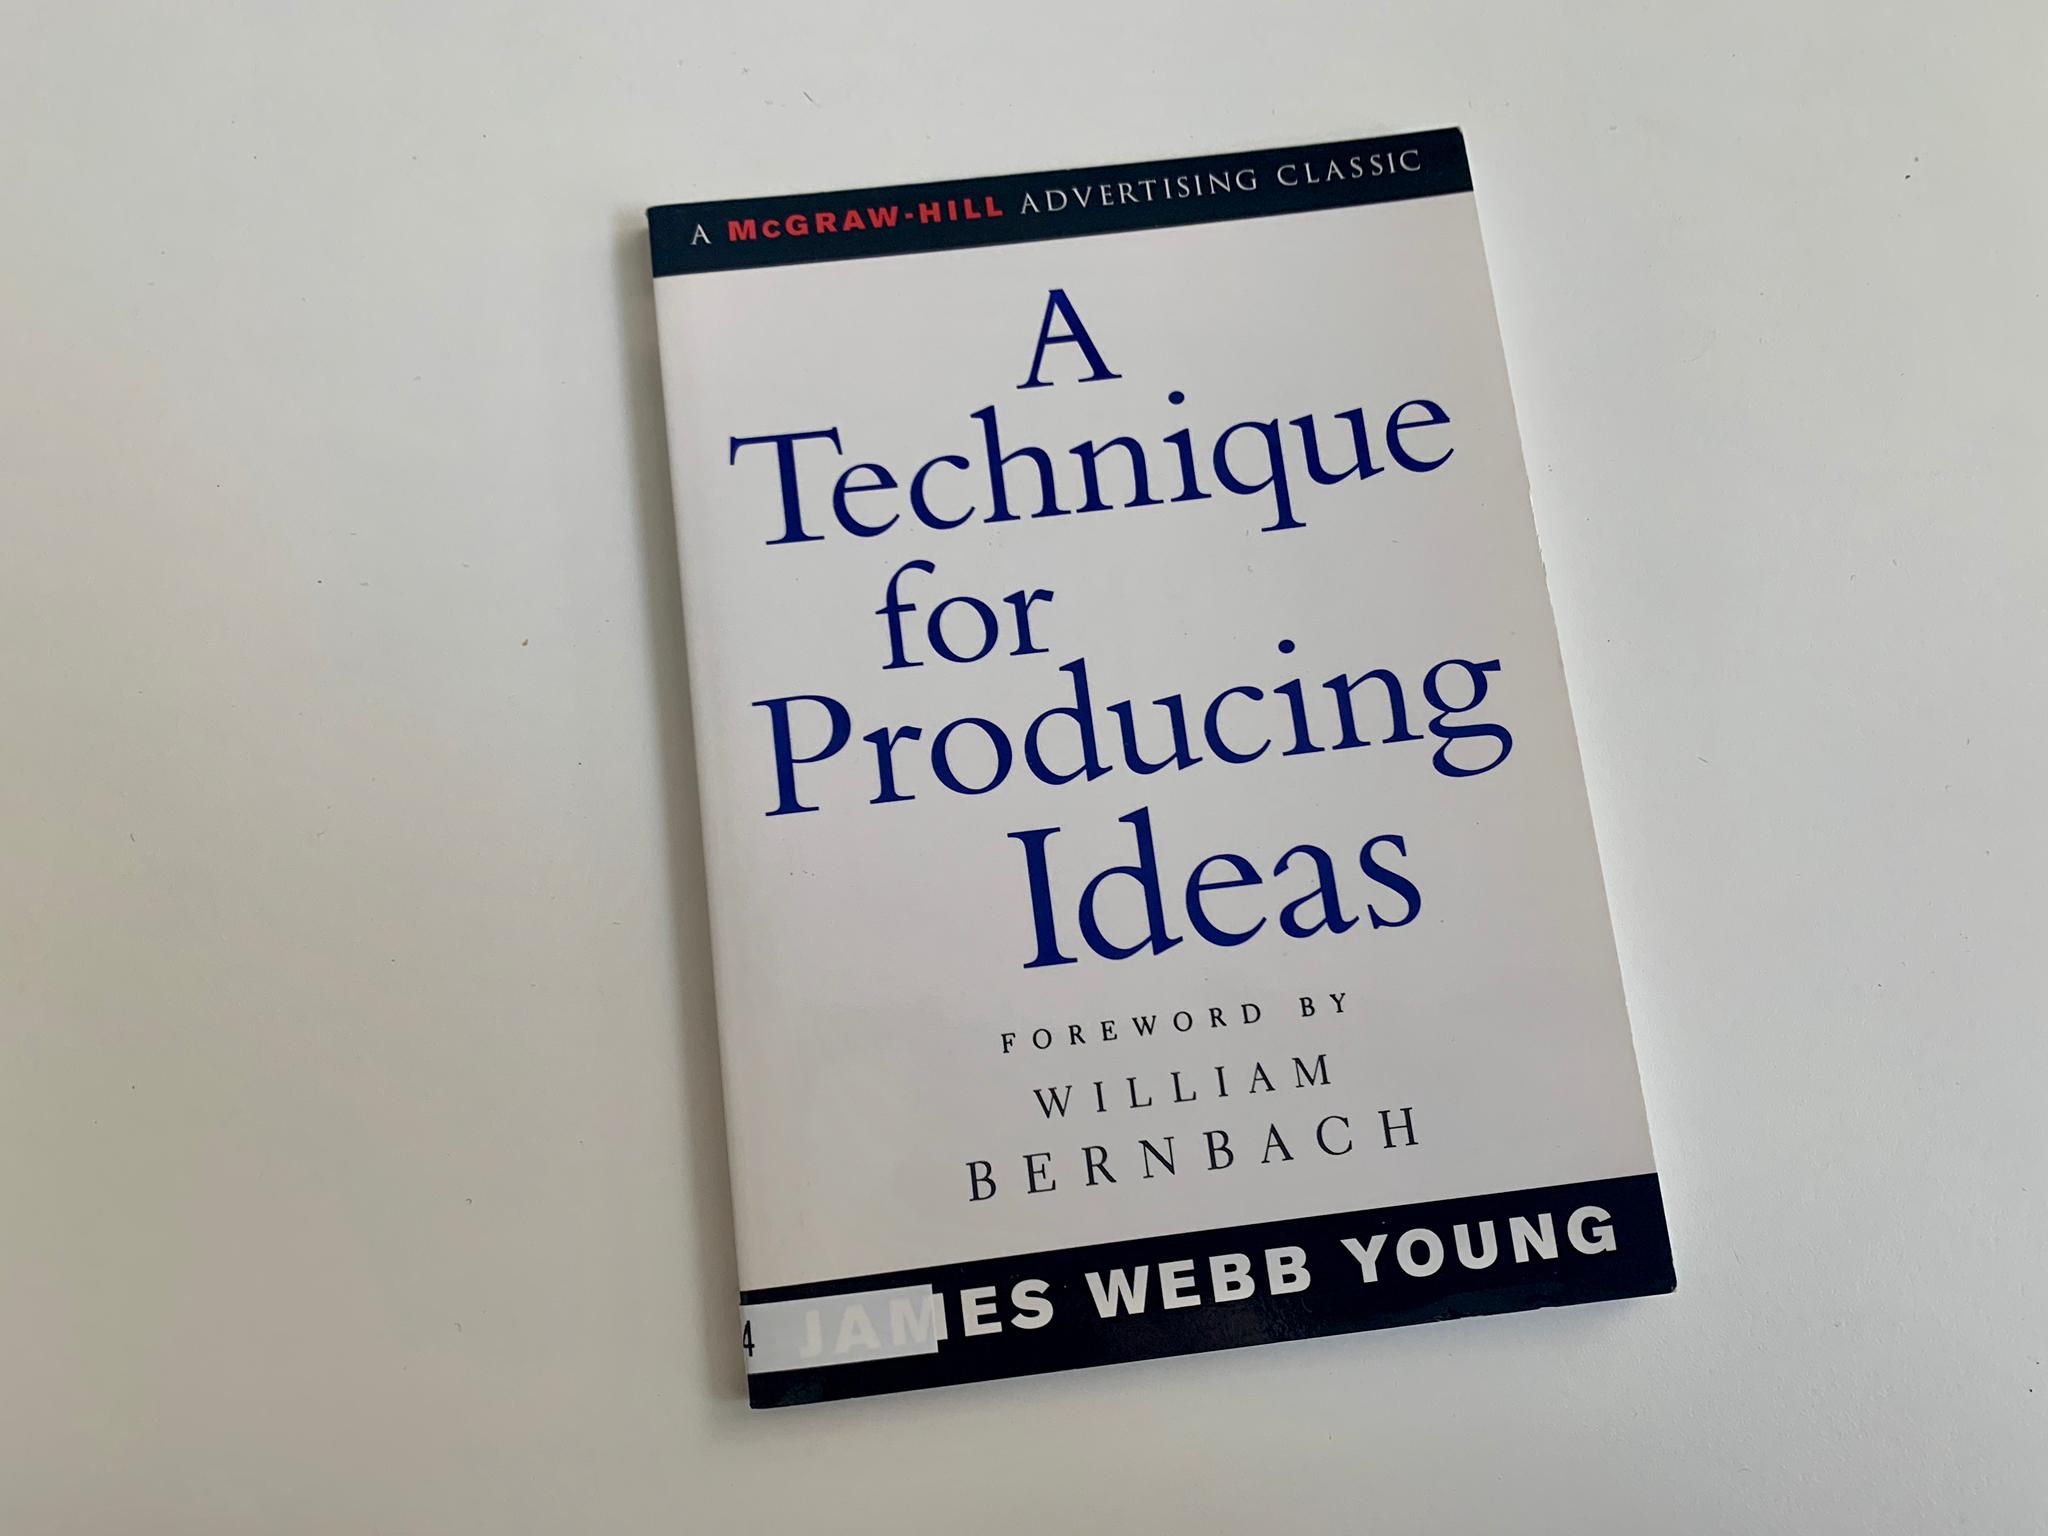 A technique for producing ideas